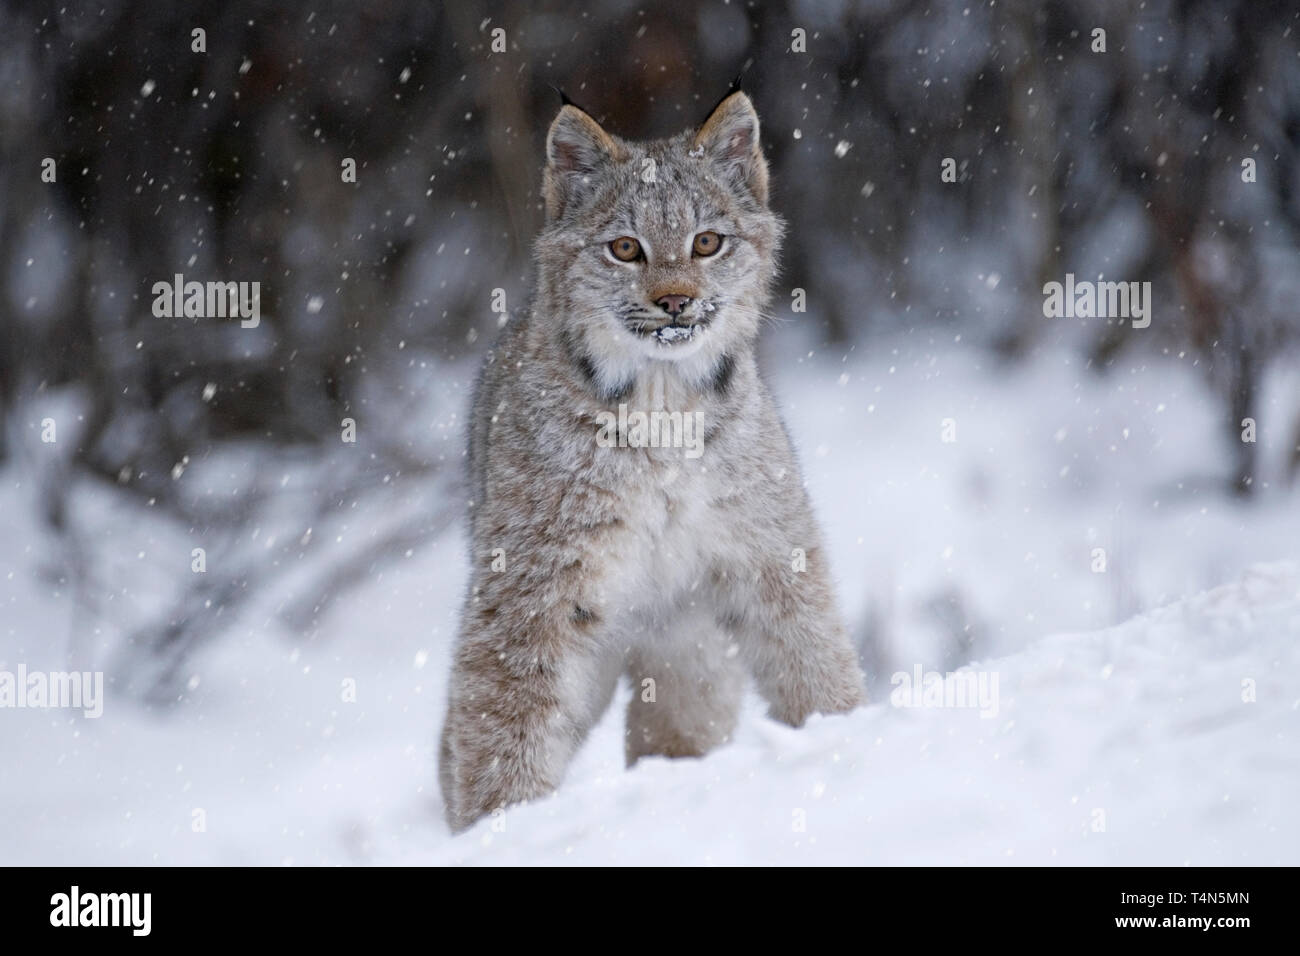 América del Norte; Estados Unidos; Alaska; Denali Park; fauna silvestre; mamífero; Cat;; Lynx Lynx canadensis; gatito; Lynx gatito cazar liebres a principios de noviembre. Foto de stock